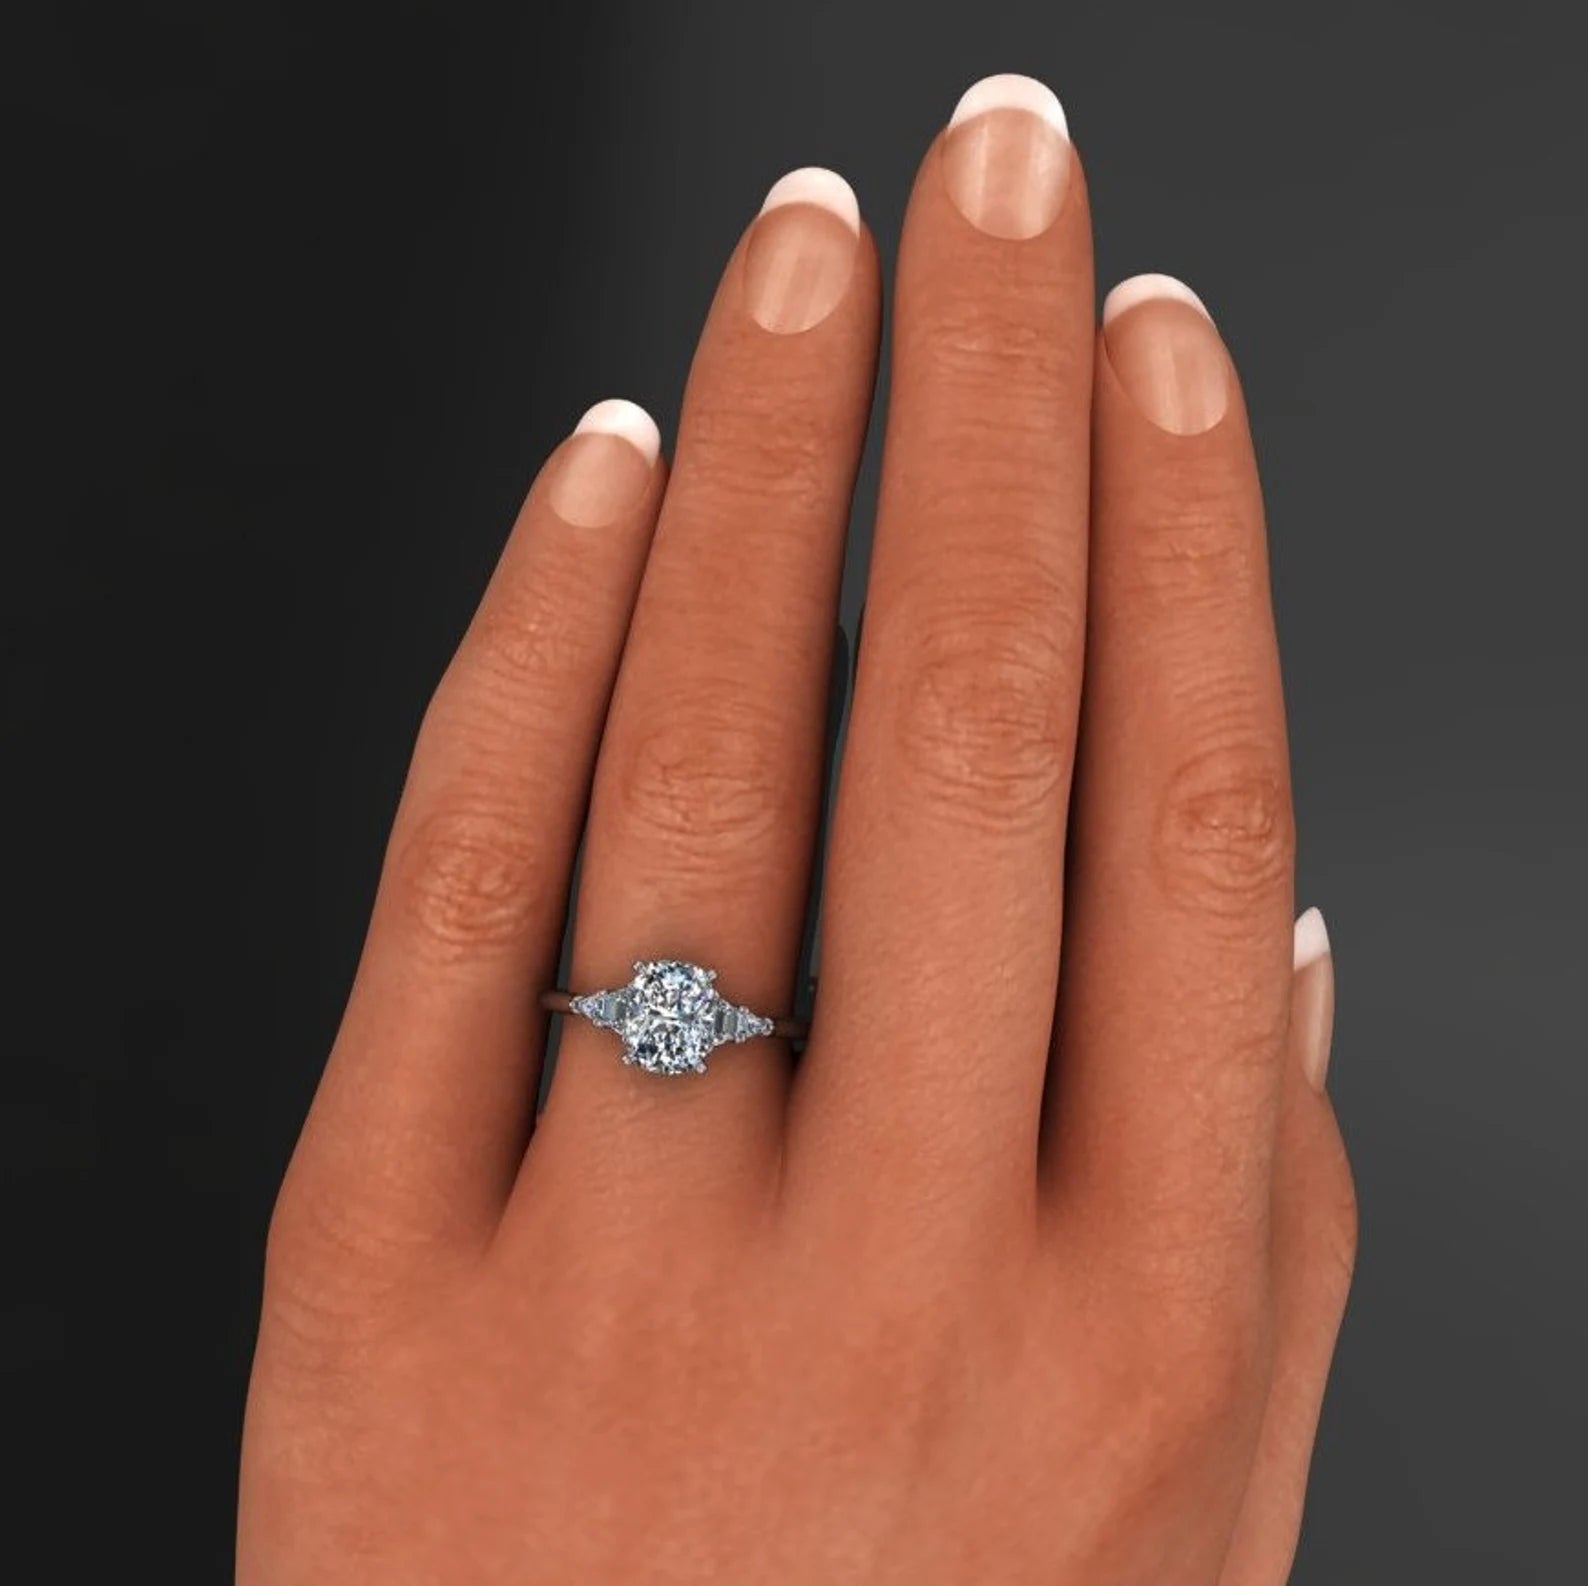 jazz ring - 2 carat cushion cut moissanite engagement ring, 5 stone ring - J Hollywood Designs